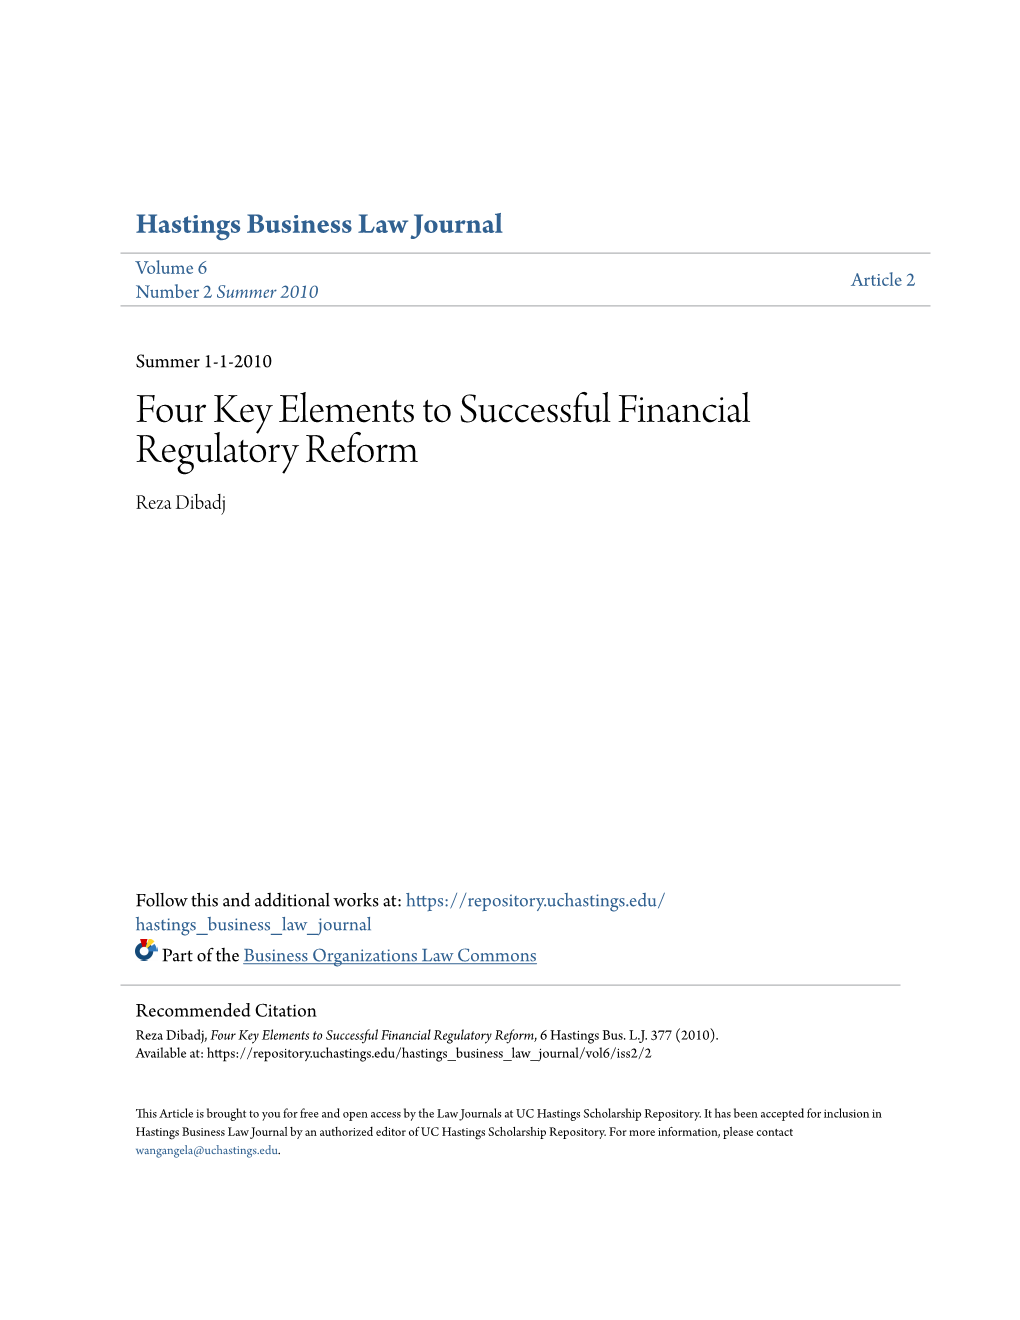 Four Key Elements to Successful Financial Regulatory Reform Reza Dibadj